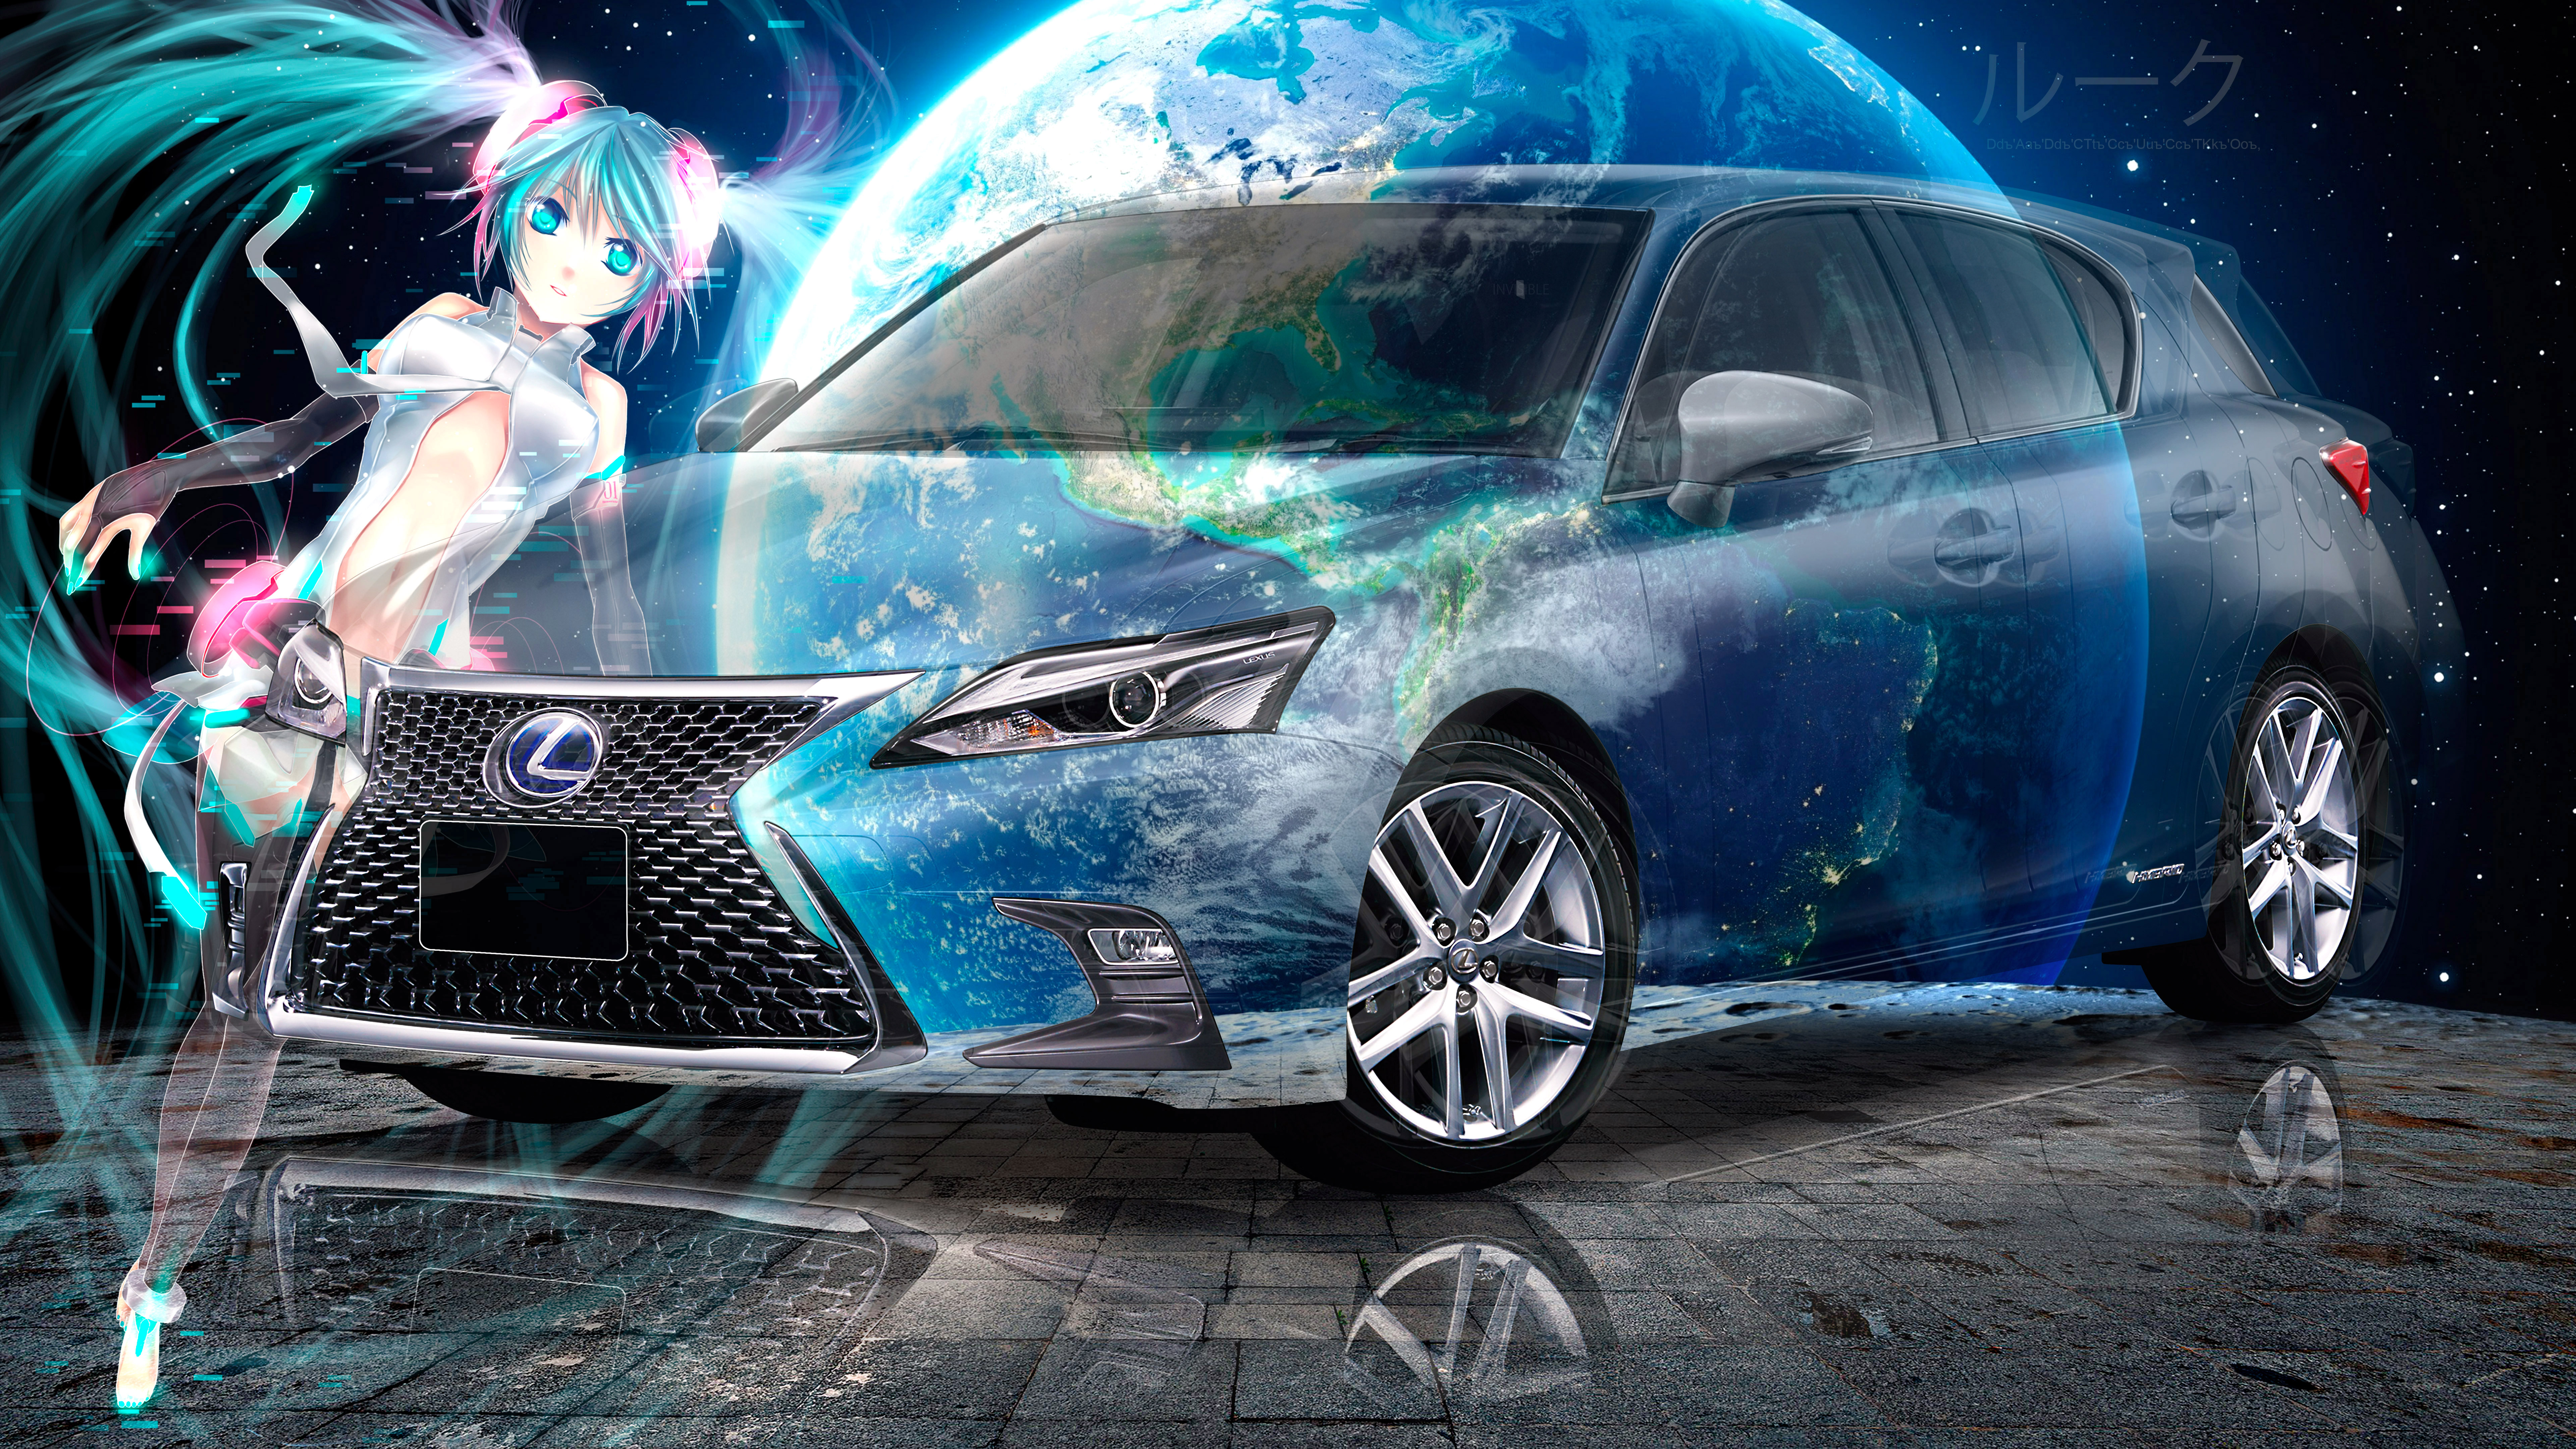 Lexus-CT200h-Hybrid-Super-Crystal-Me-Hatsune-Miku-Planet-Earth-TonyCode-Art-Car